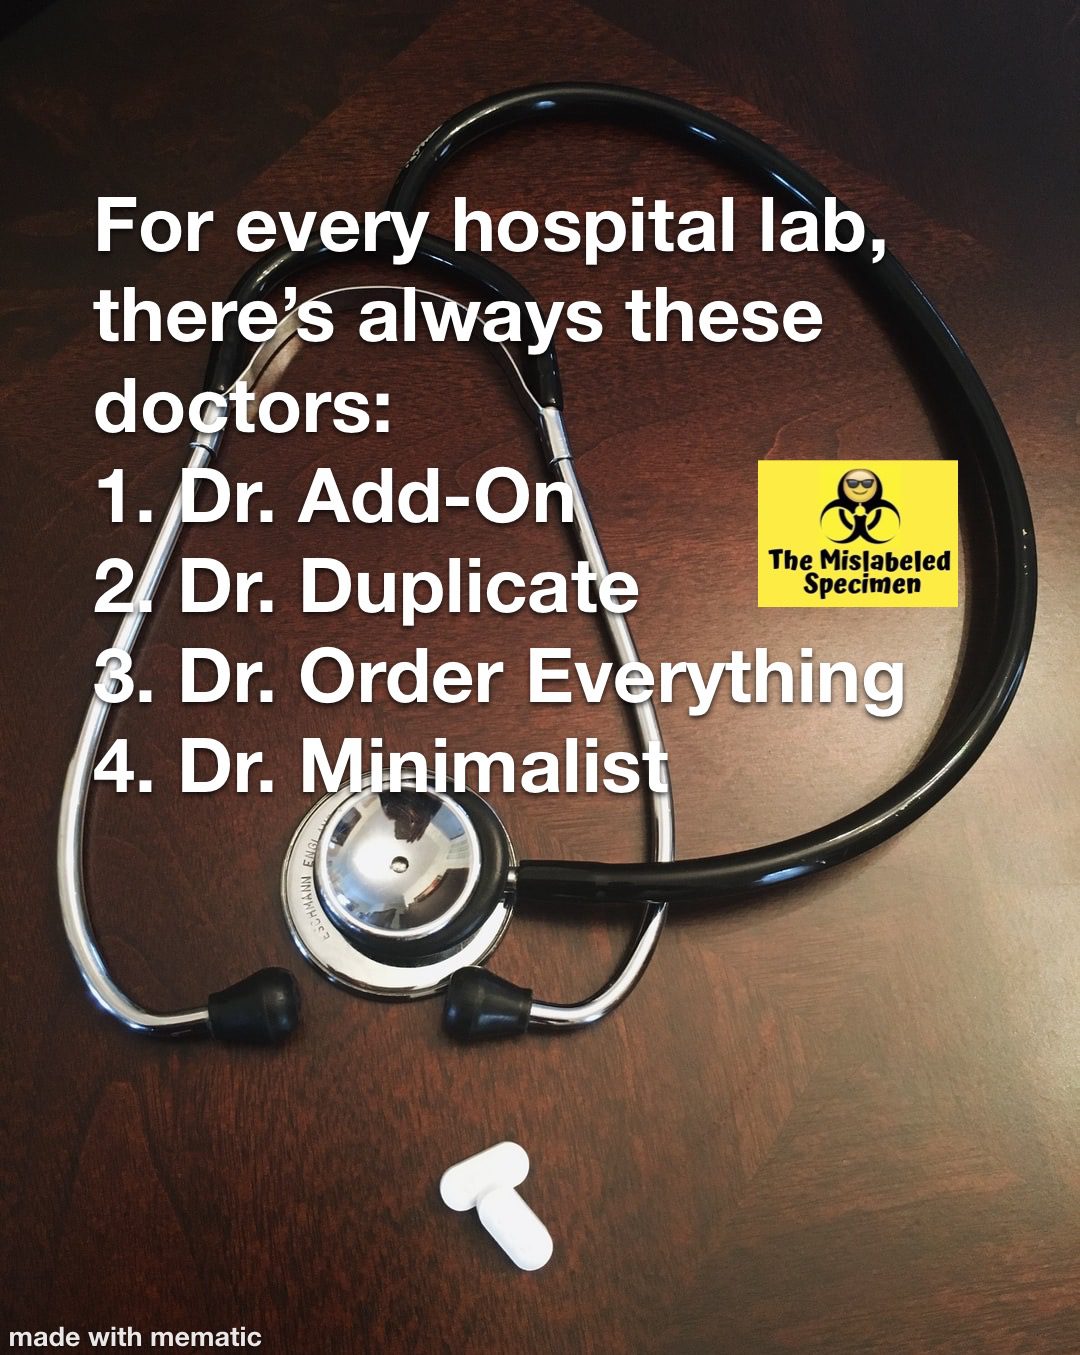 Funny Laboratory Science Memes MT, MLT, CLS, MLS, Phlebotomist,Lab Assistant, Scientist, Technologist The Mislabeled Specimen